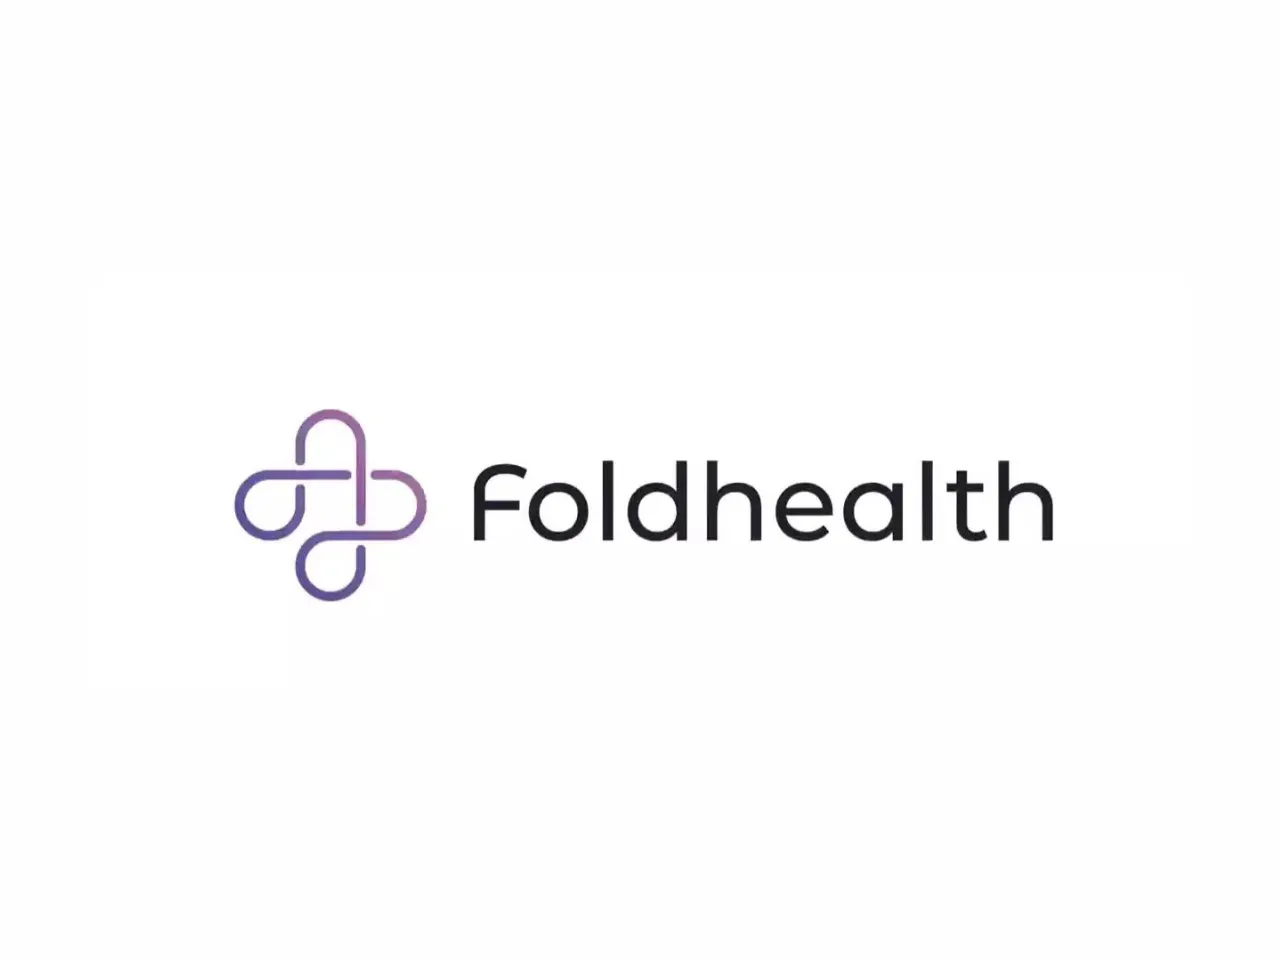 Healthtech startup Fold Health raises $6M led by Iron Pillar, others